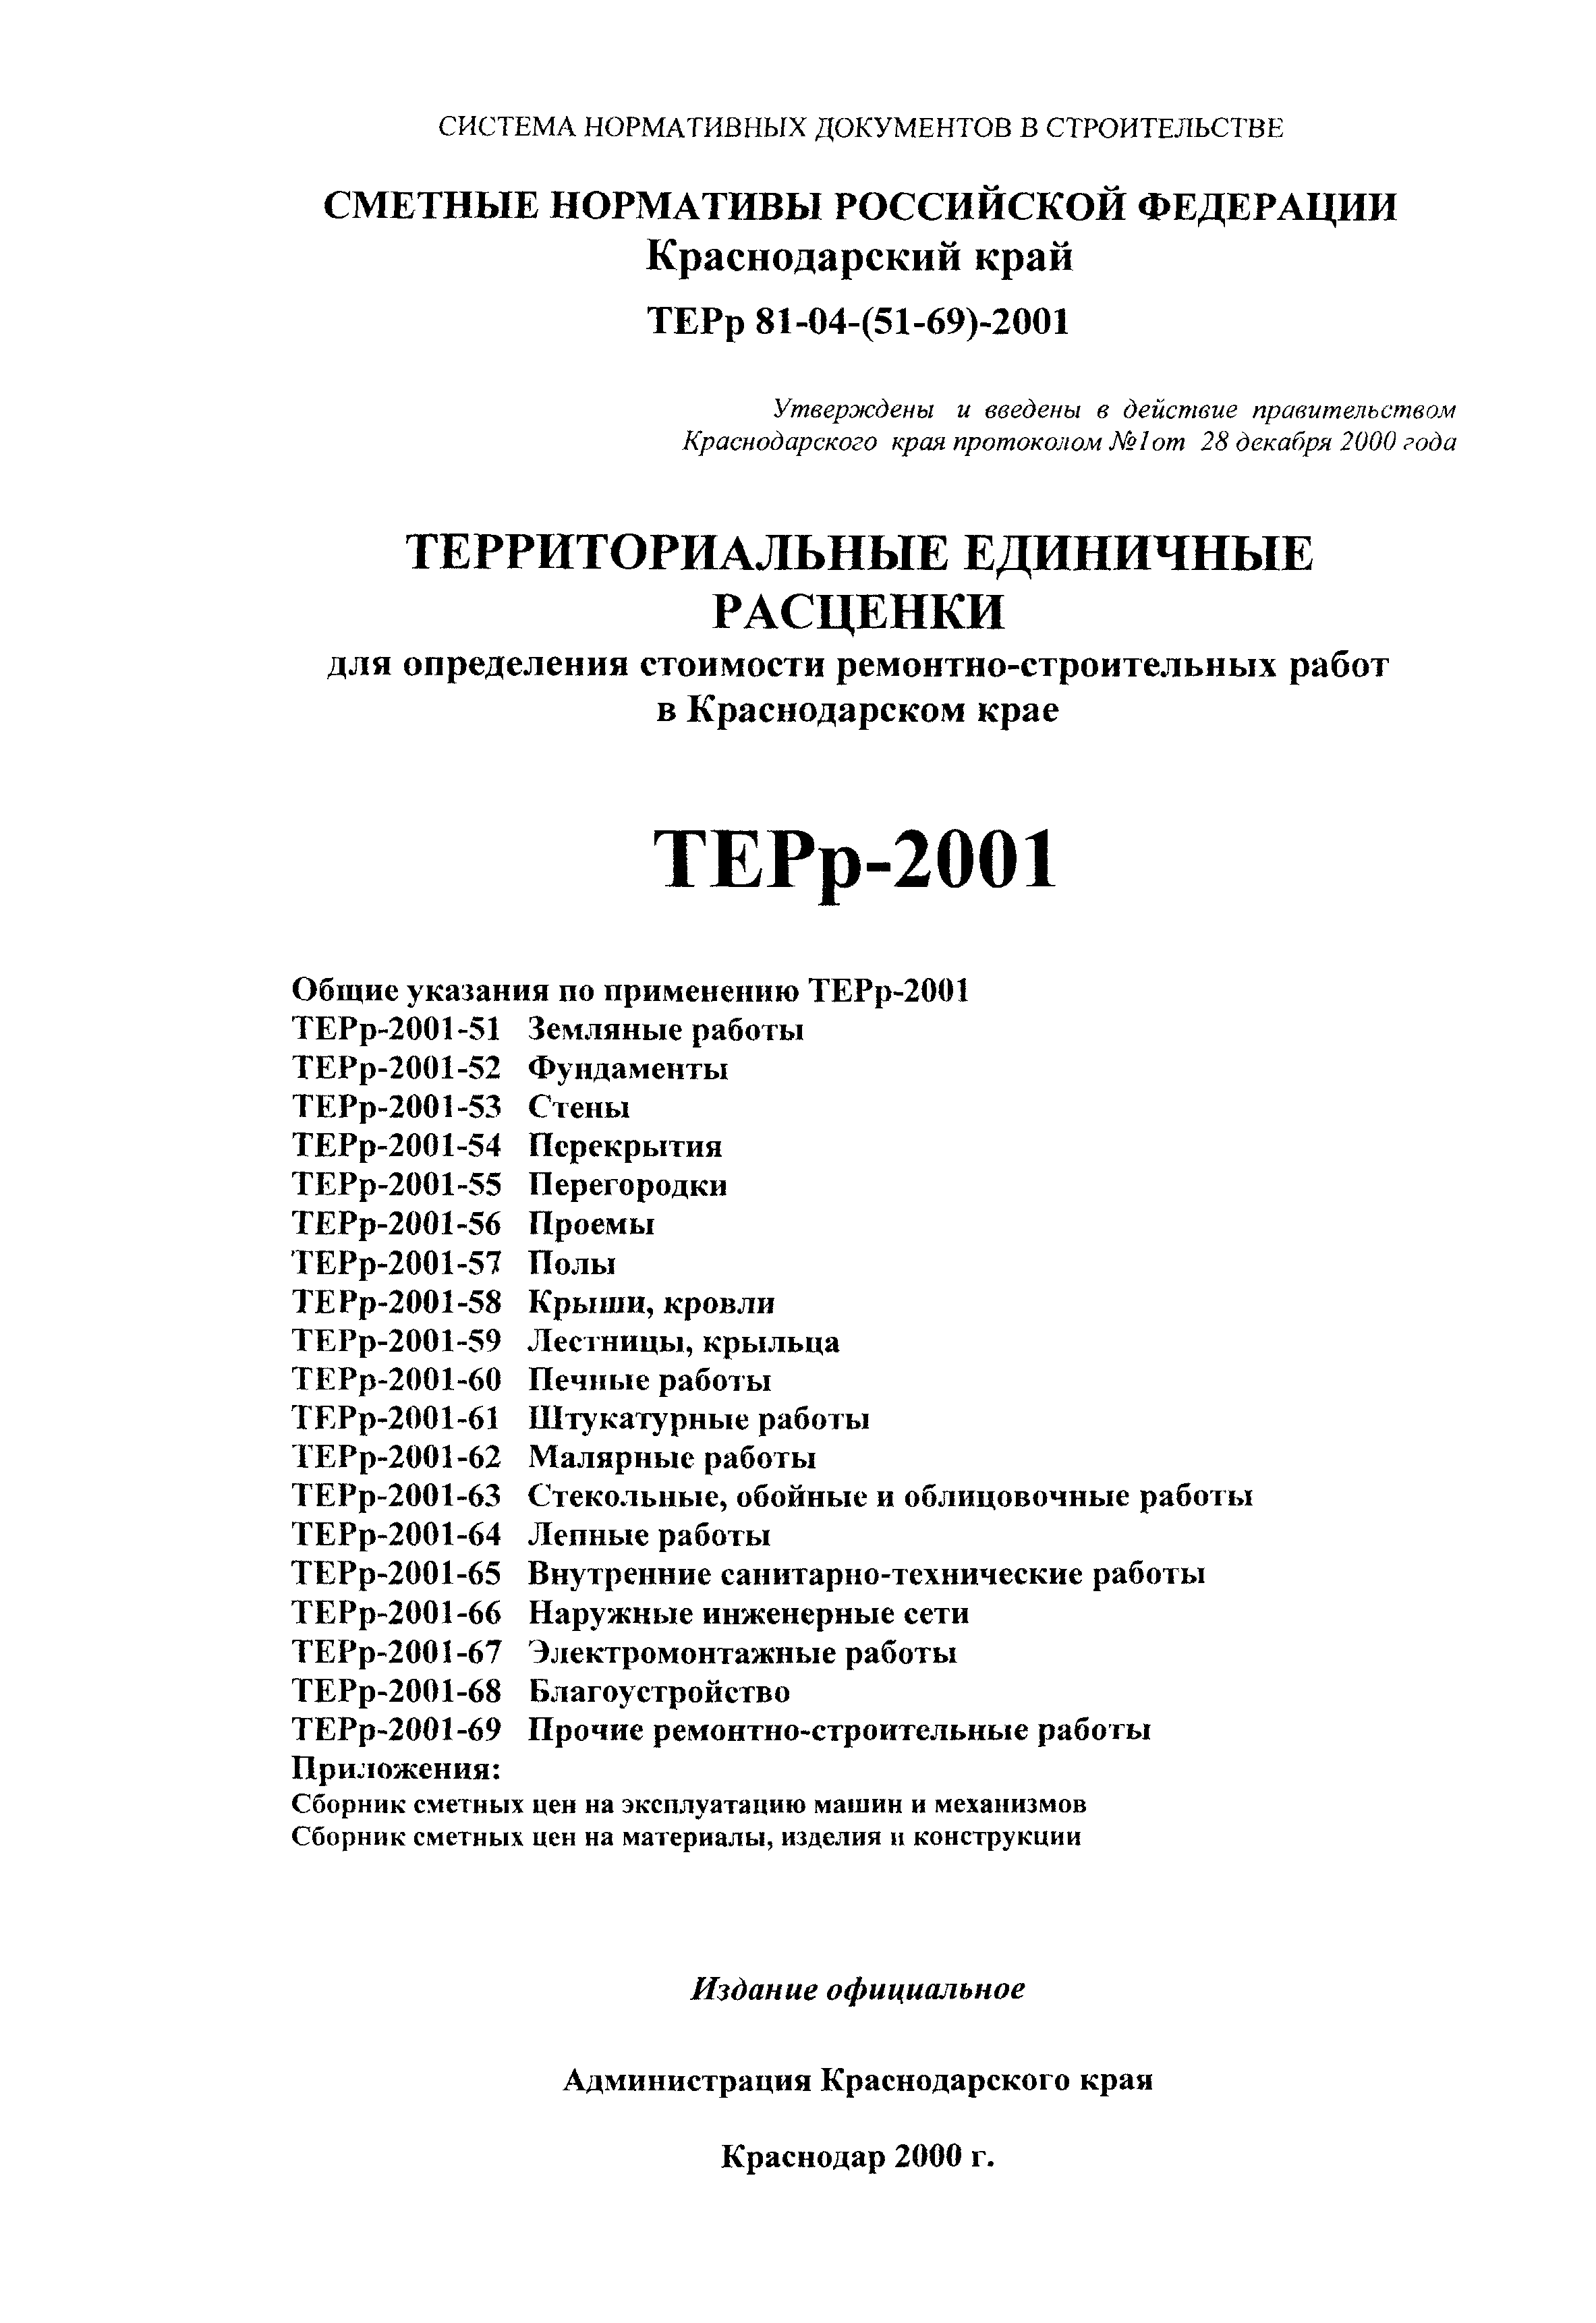 ТЕРр Краснодарский край 2001-63